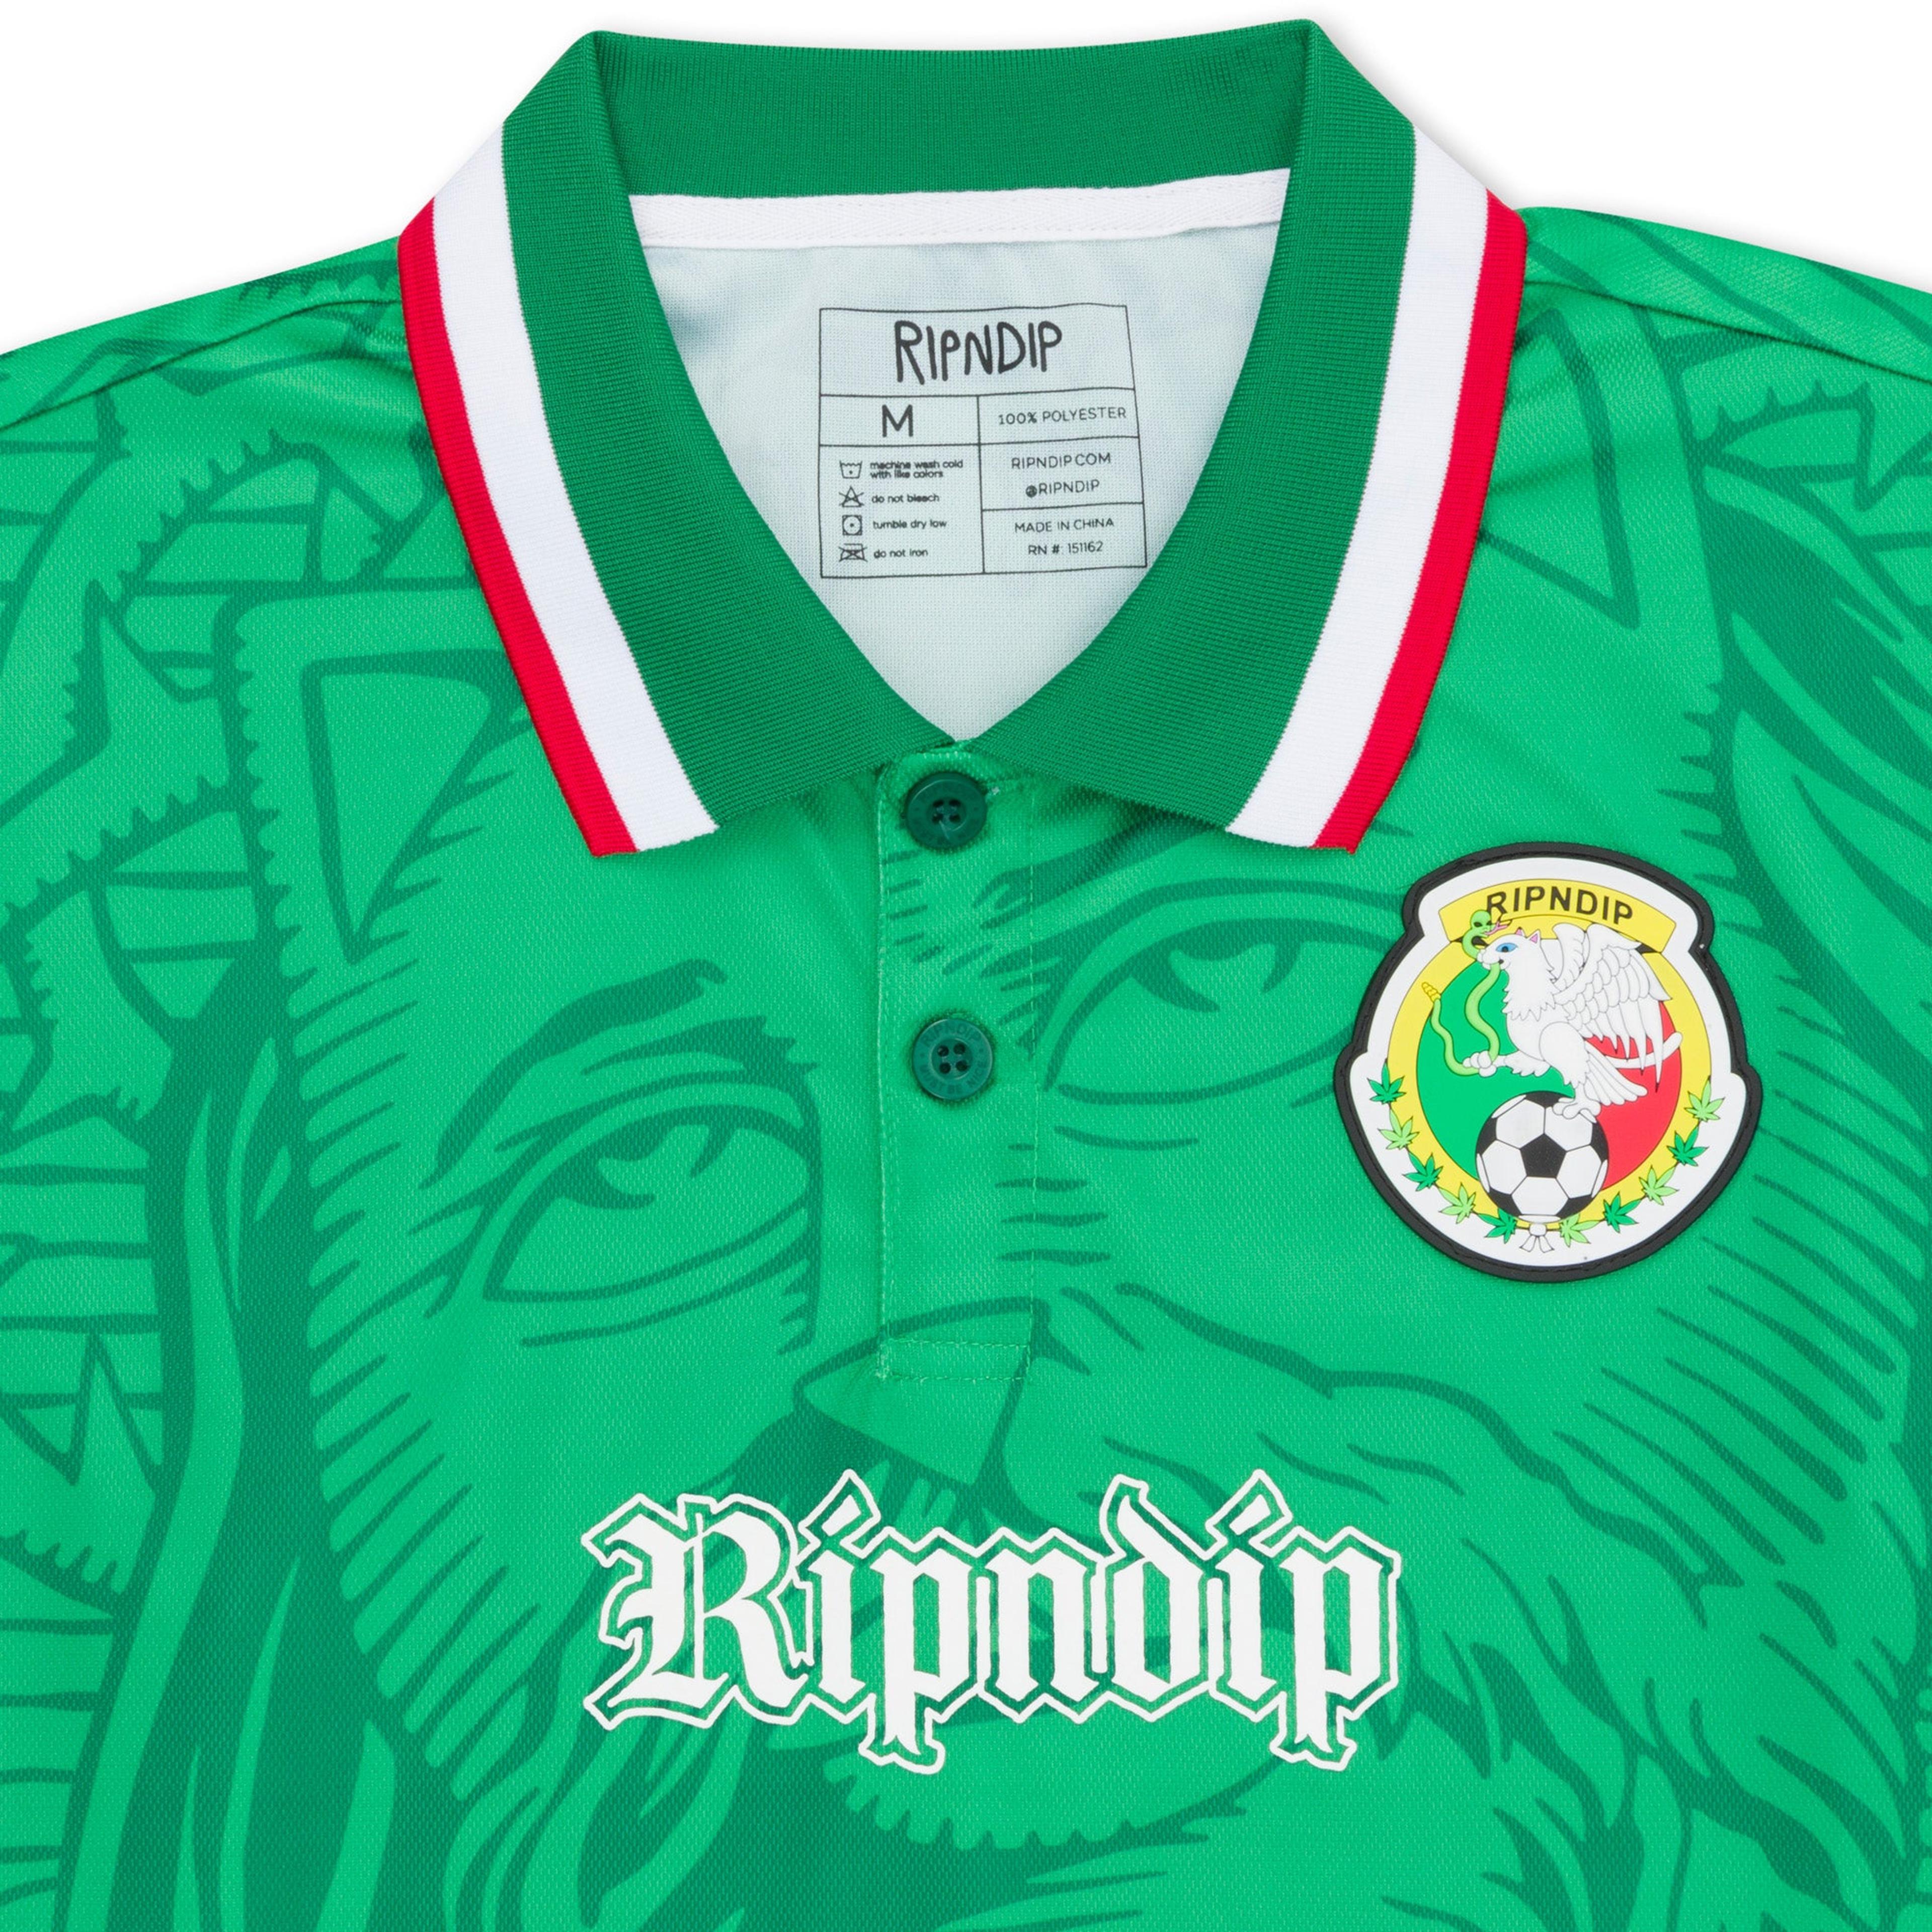 Alternate View 2 of Ripndip MX Soccer Jersey (Green)